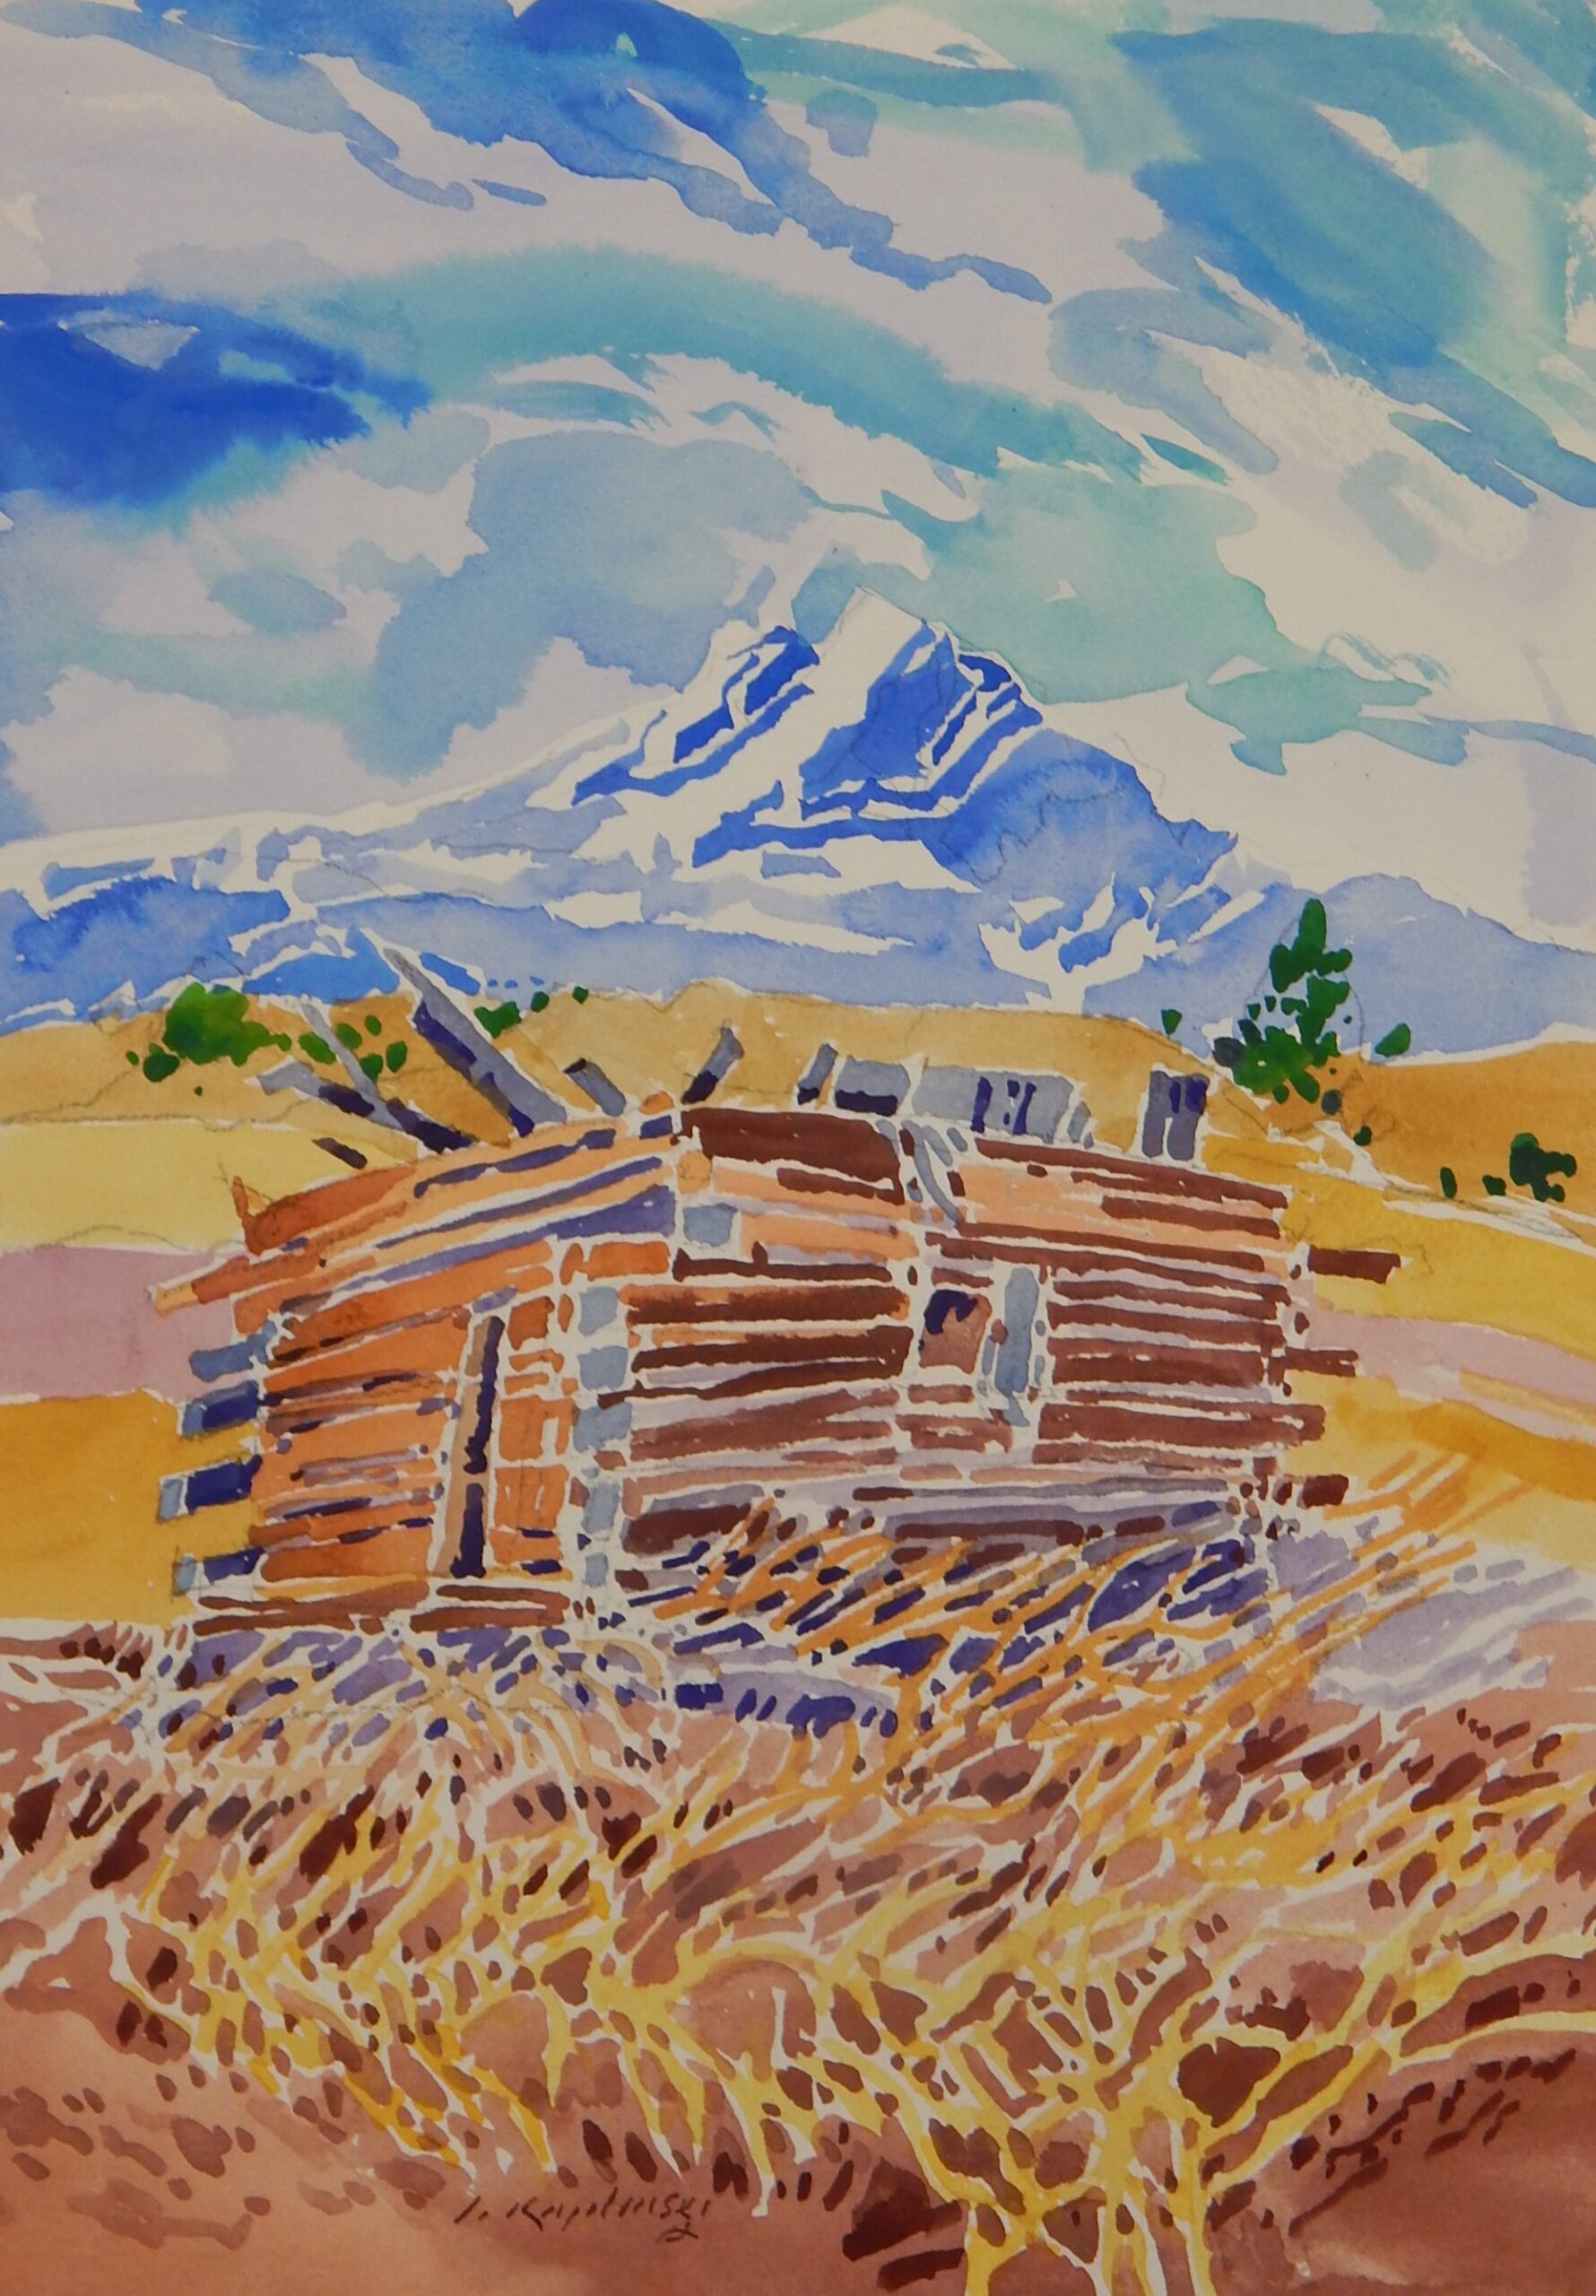 Plein air painting / watercolor by Buffalo Kapinski